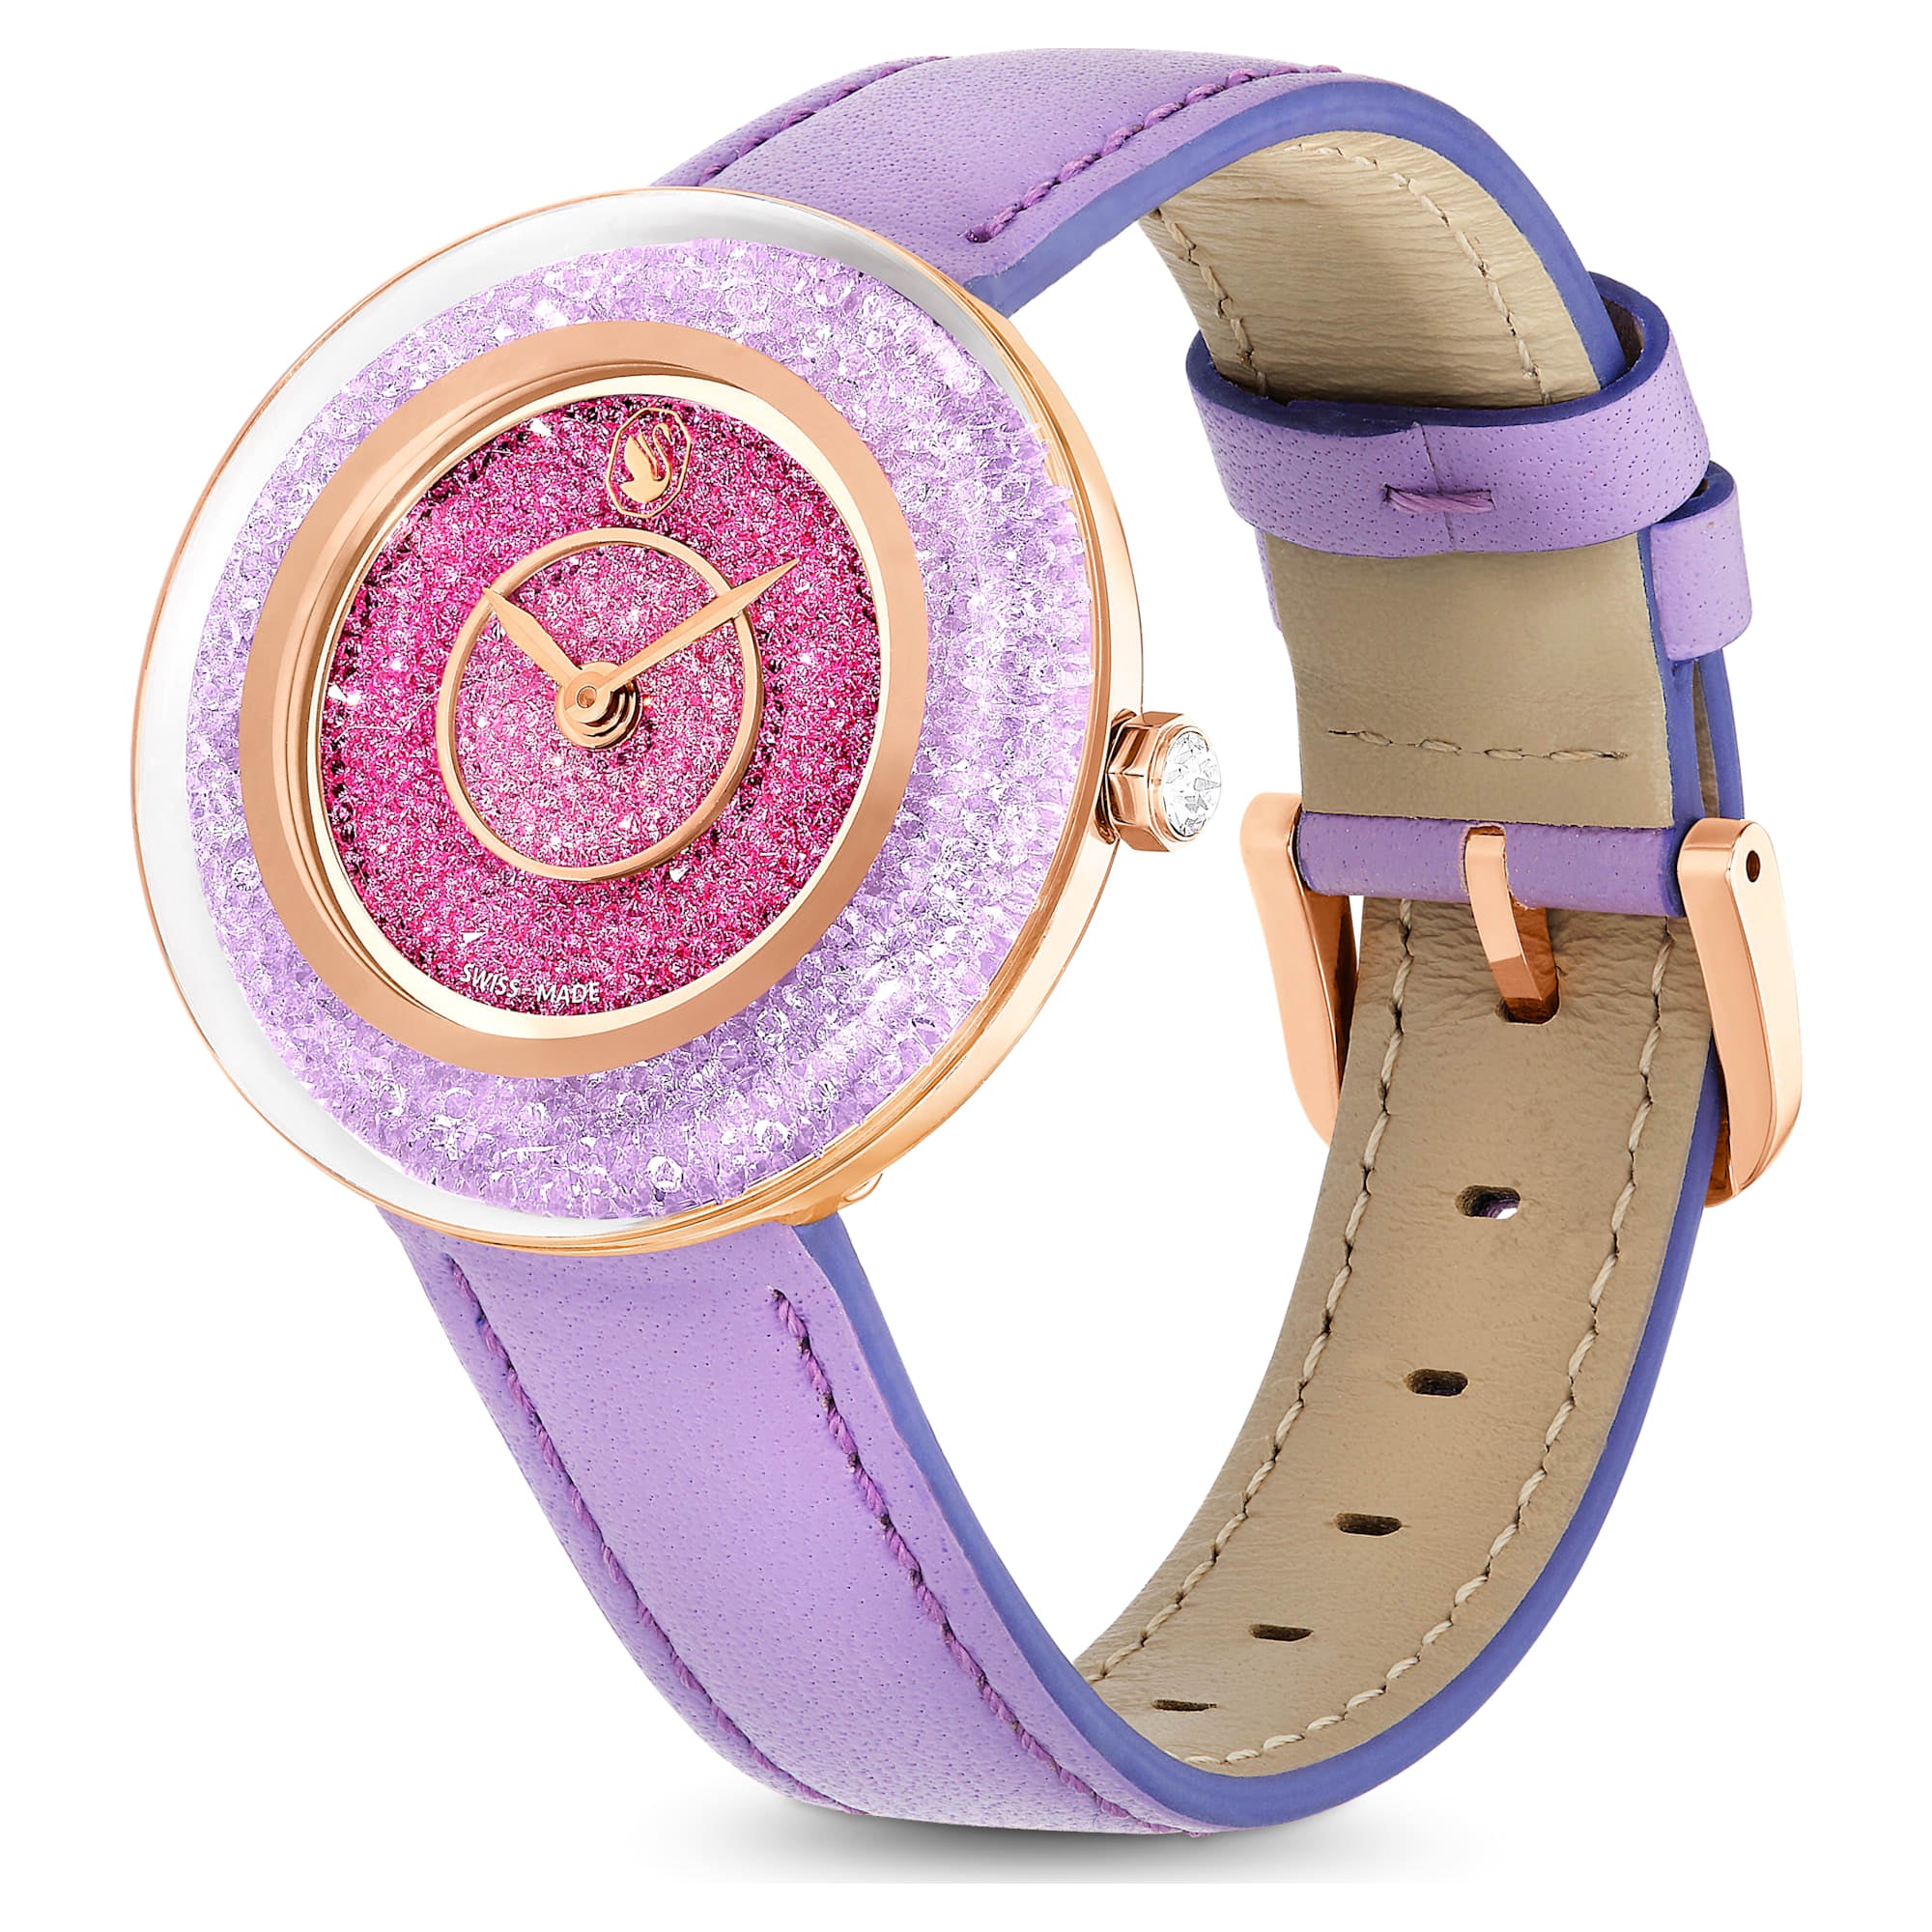 Kristalliner Glanz – Violett-Gold-Rose – Uhr – Swarovski